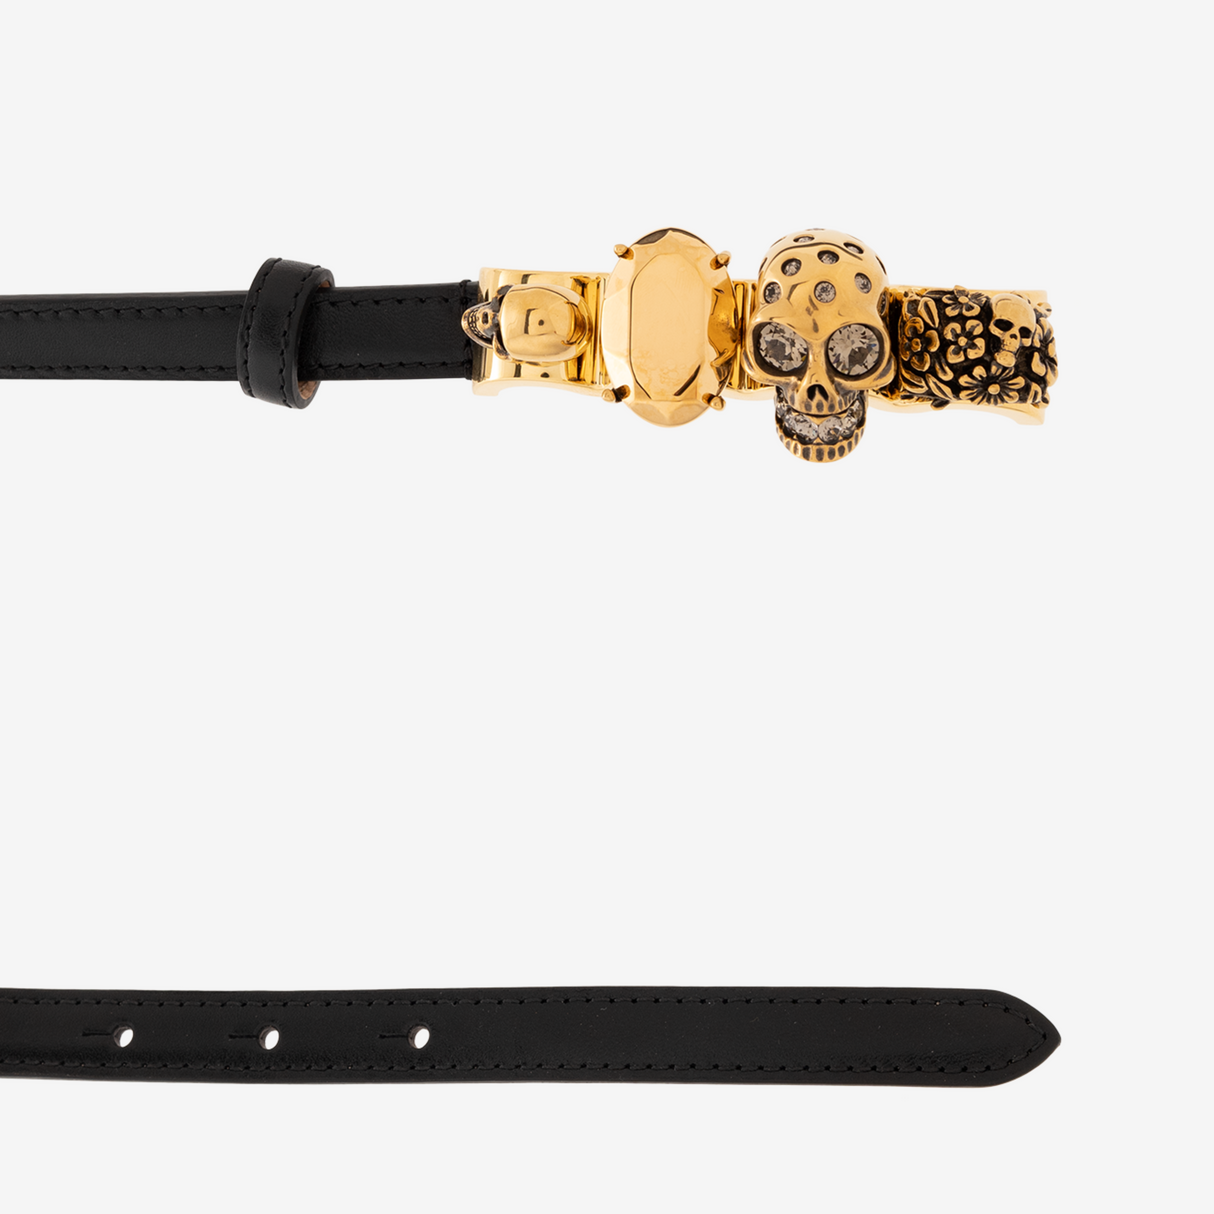 The Knuckle Belt in Black/Gold